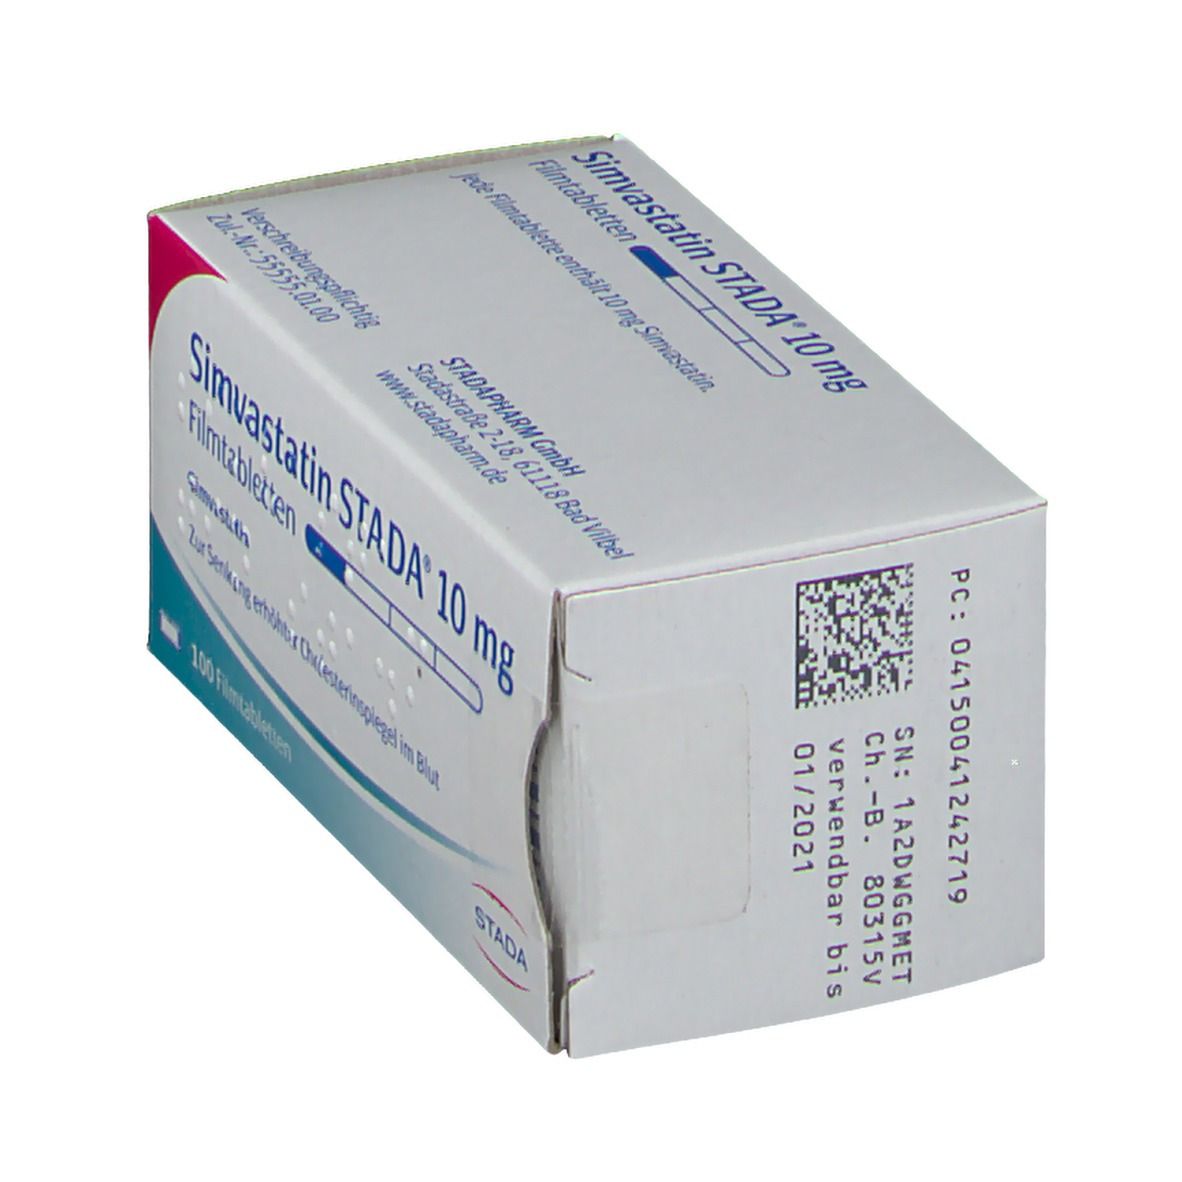 Simvastatin STADA® 10 mg